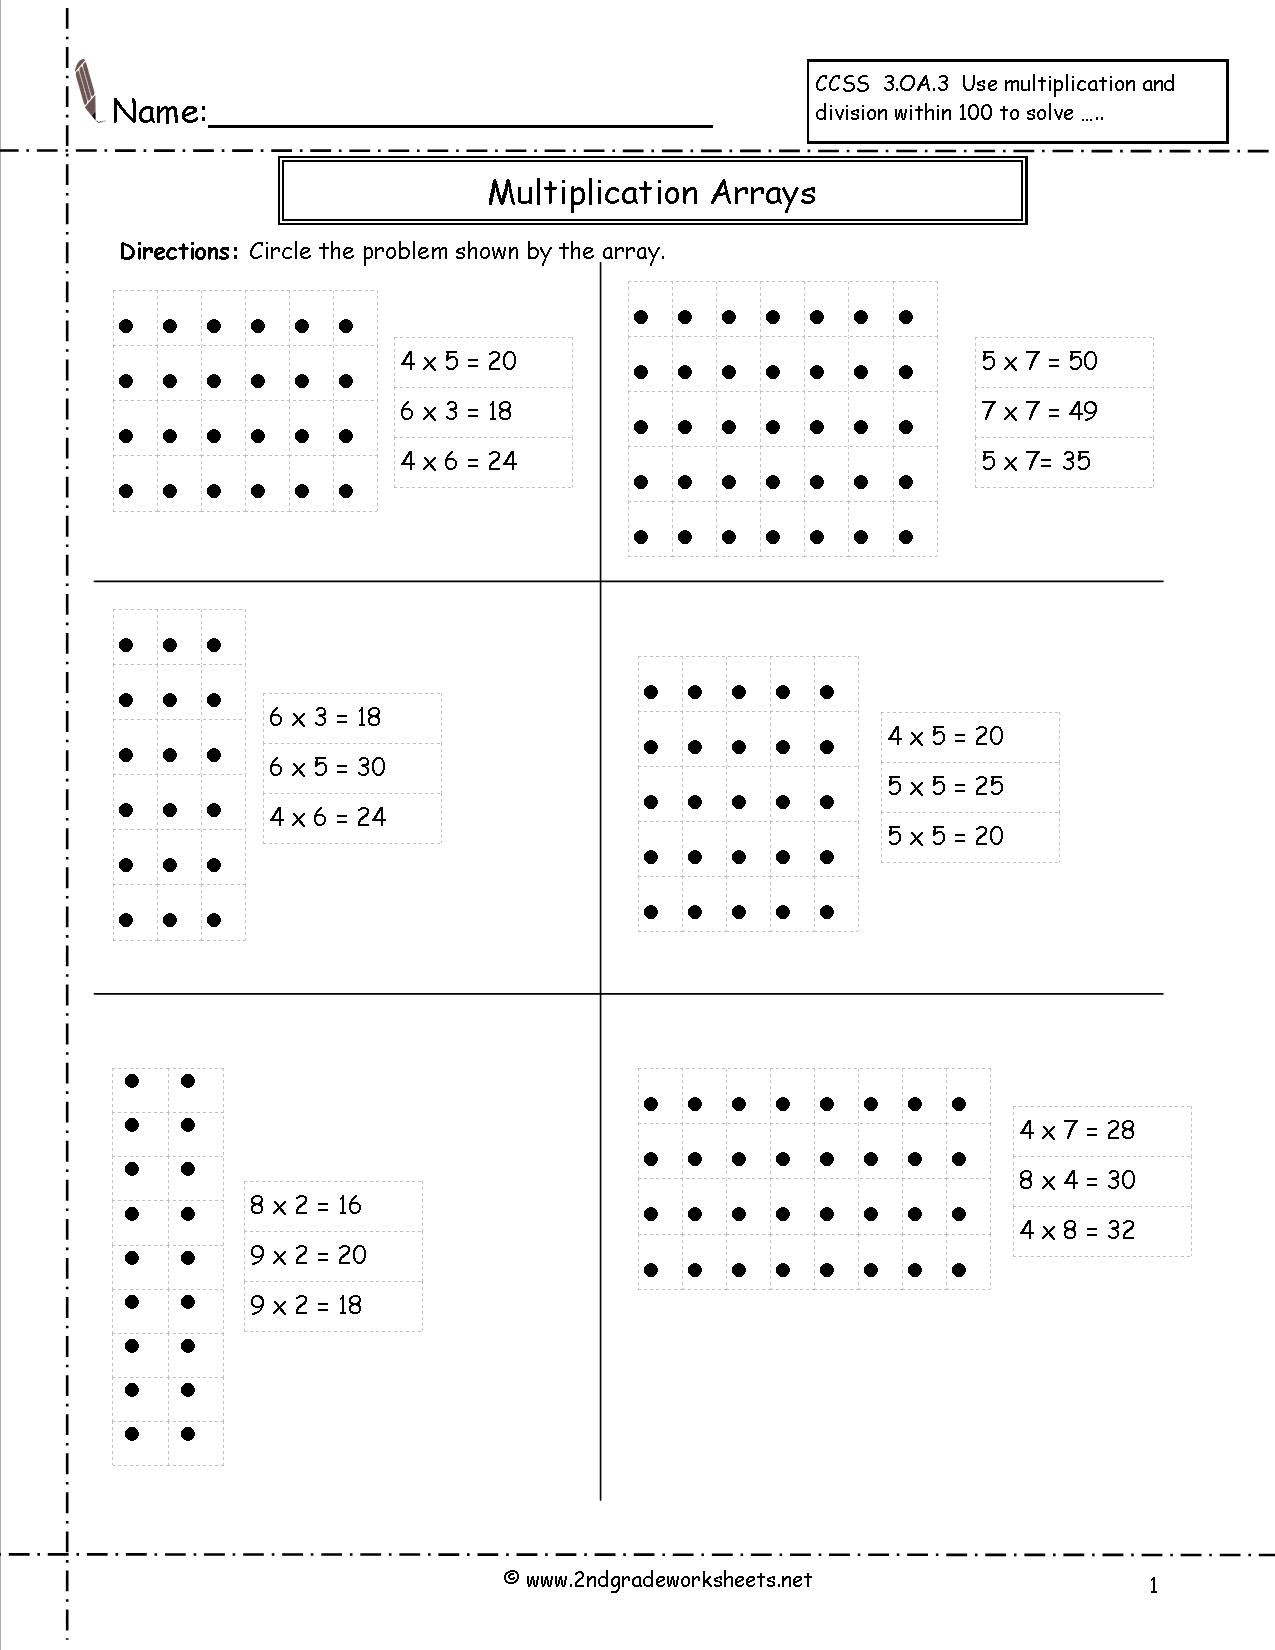 printable-multiplication-array-worksheets-printable-multiplication-flash-cards